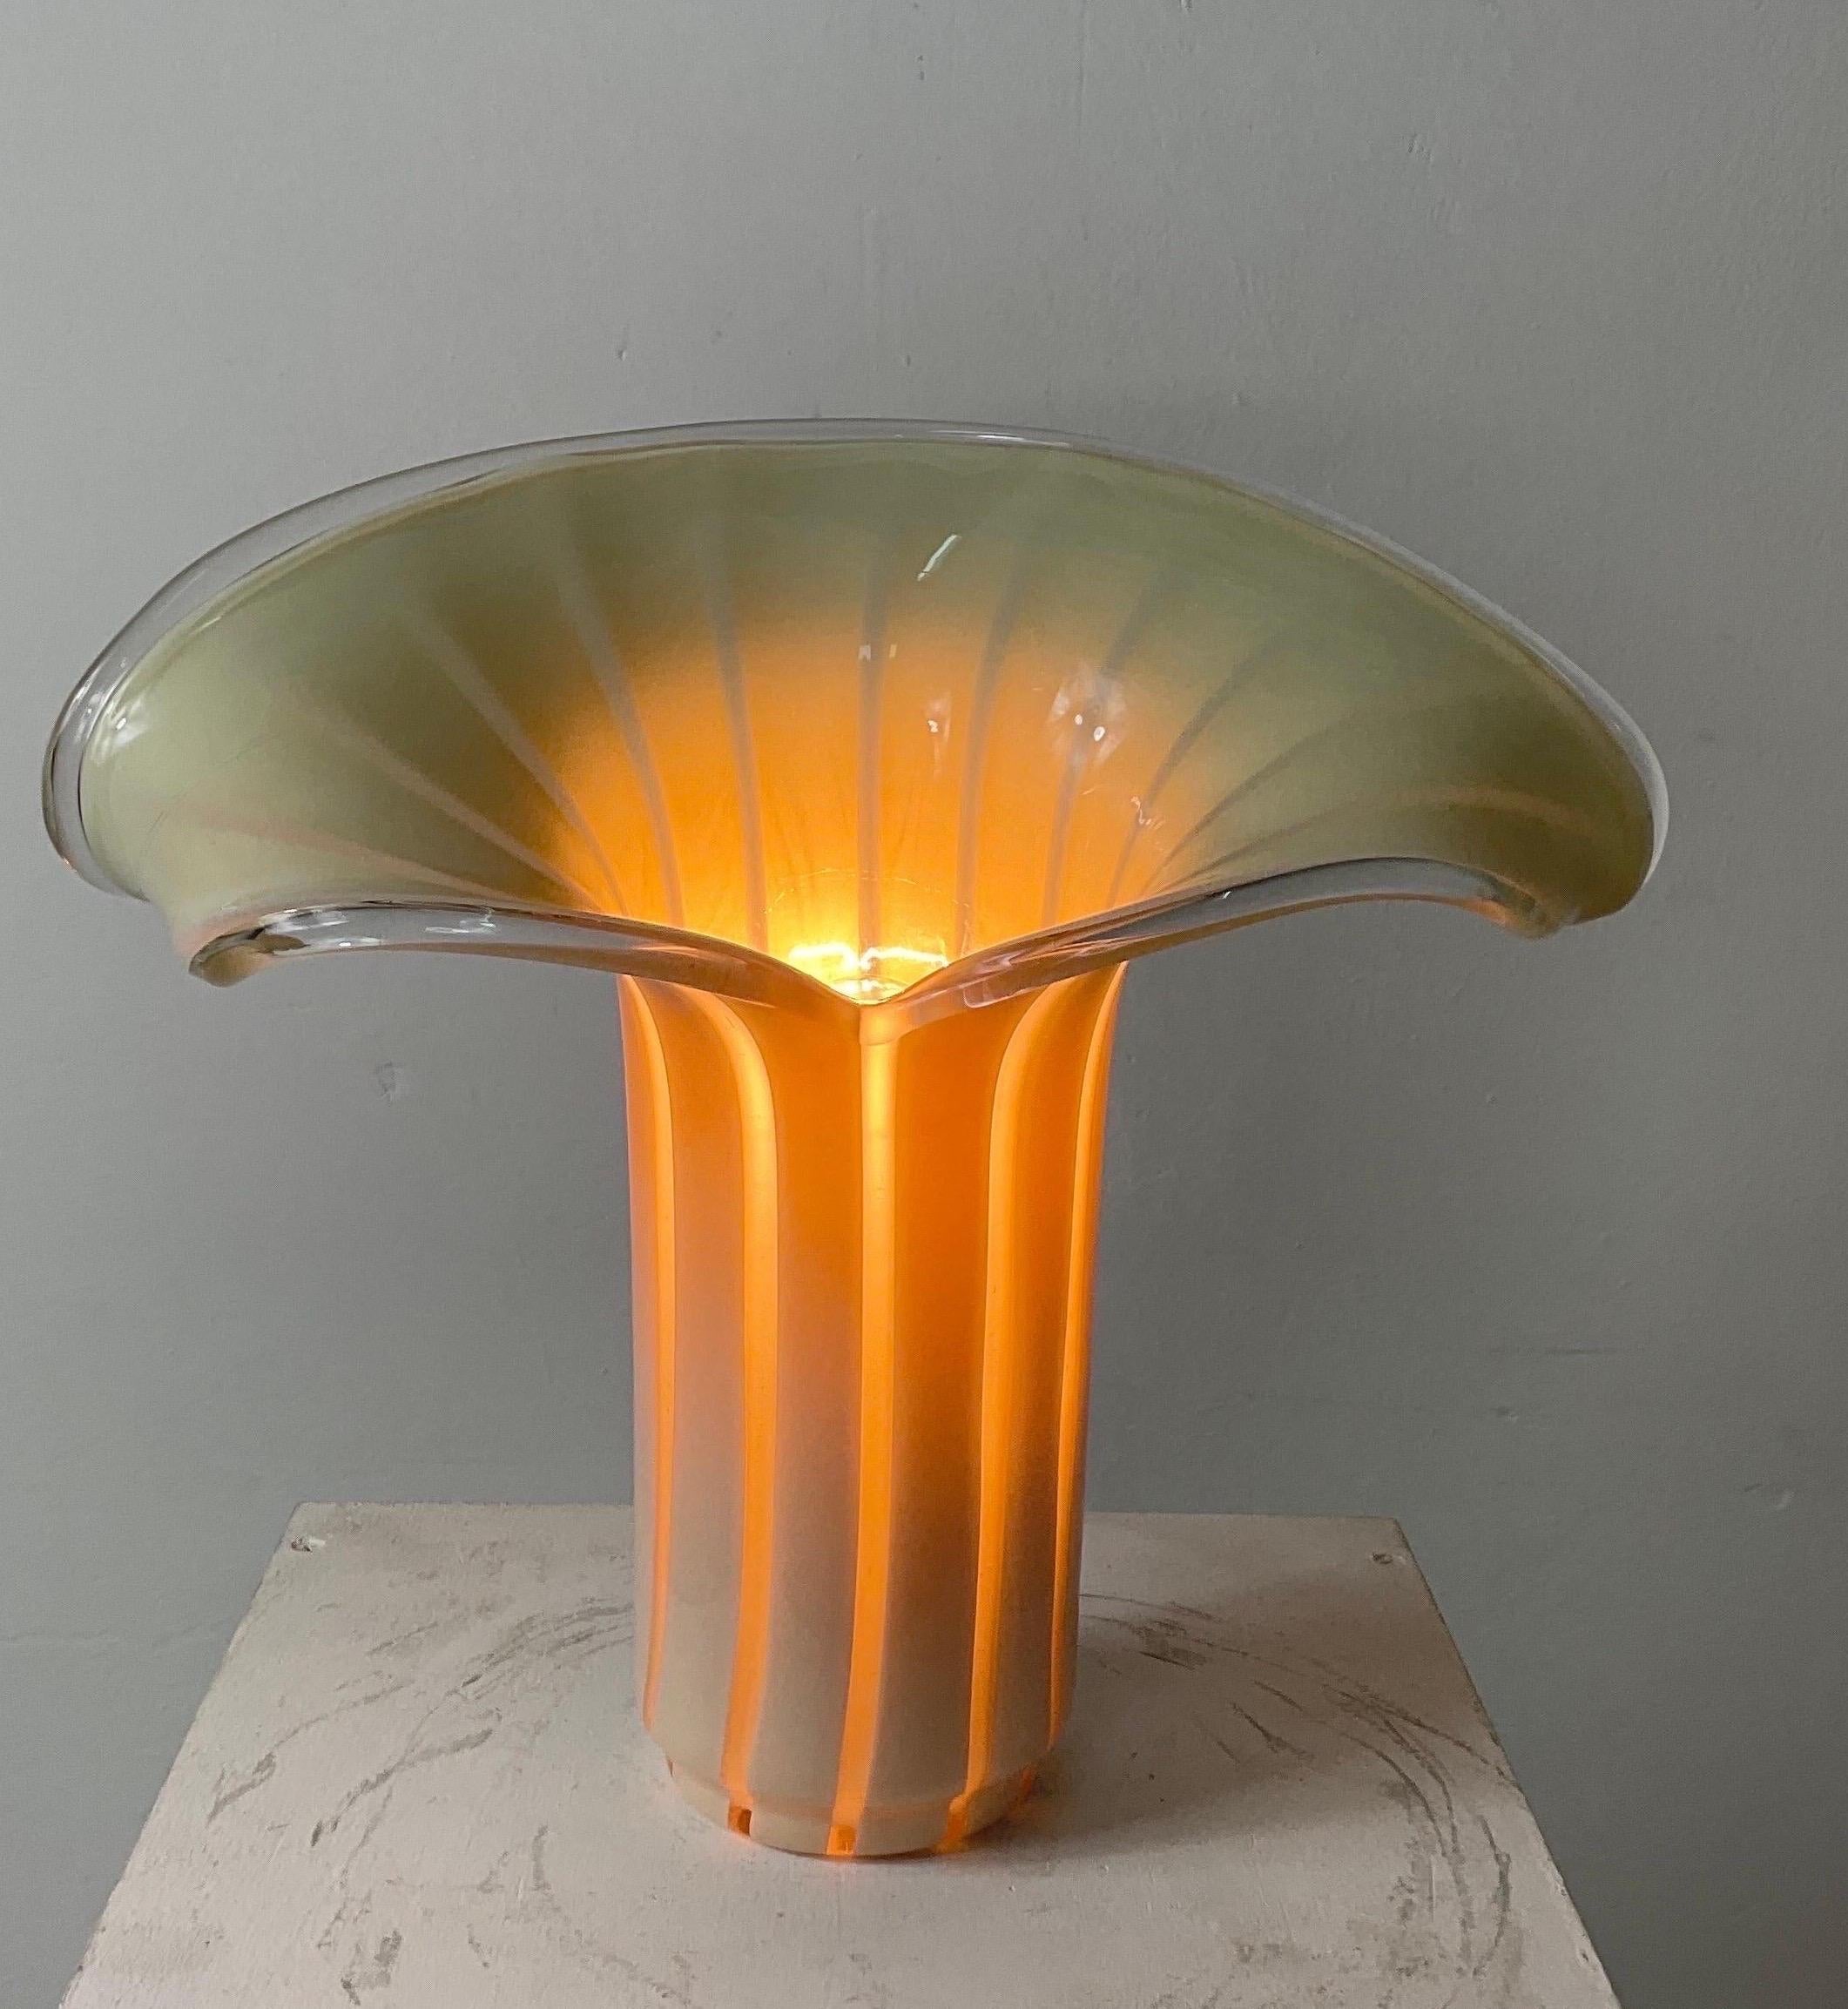 Murano glass countertop lamp in perfect condition attributable to the famous Italian designer Paolo Venini with a very rare shape.